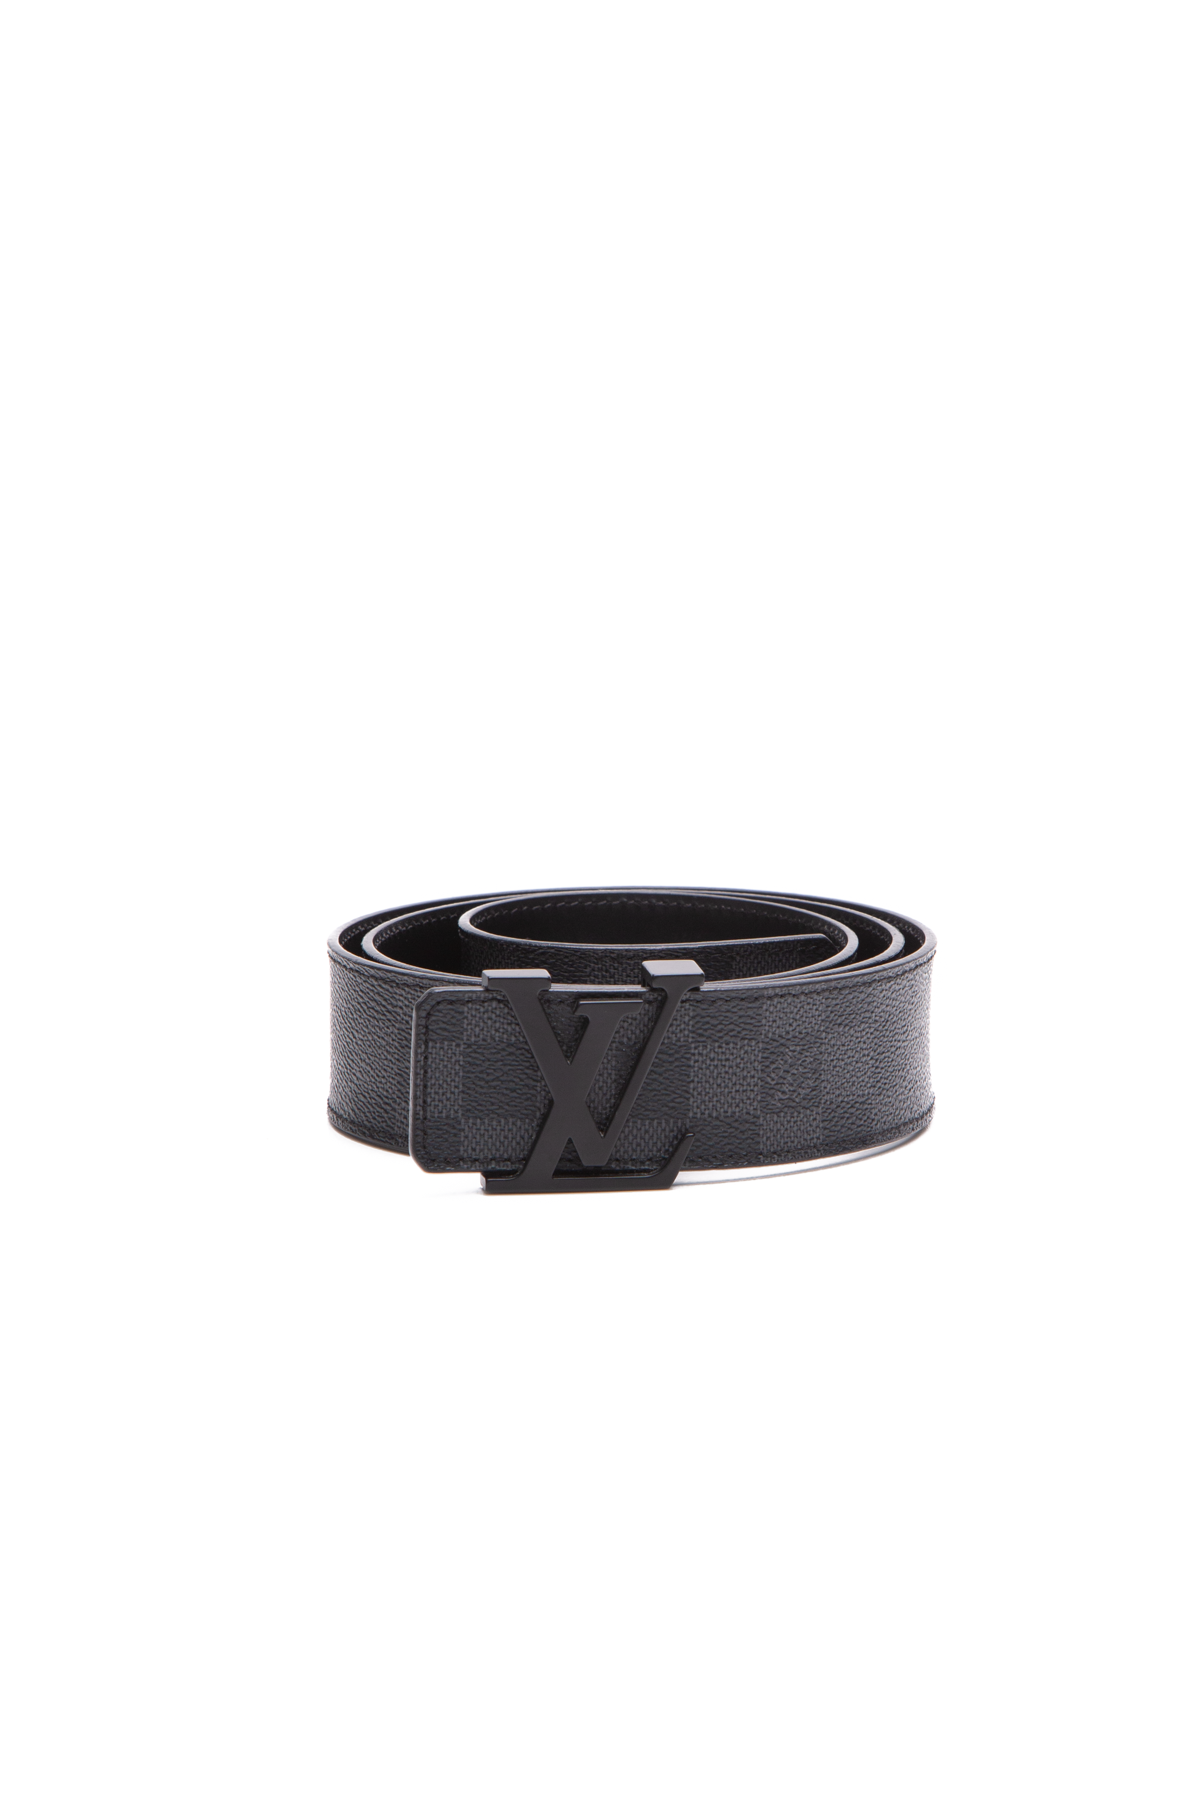 LOUIS VUITTON M9151 LV Logo 85 34 Inch Leather Belt Black Brown Japan [Used]